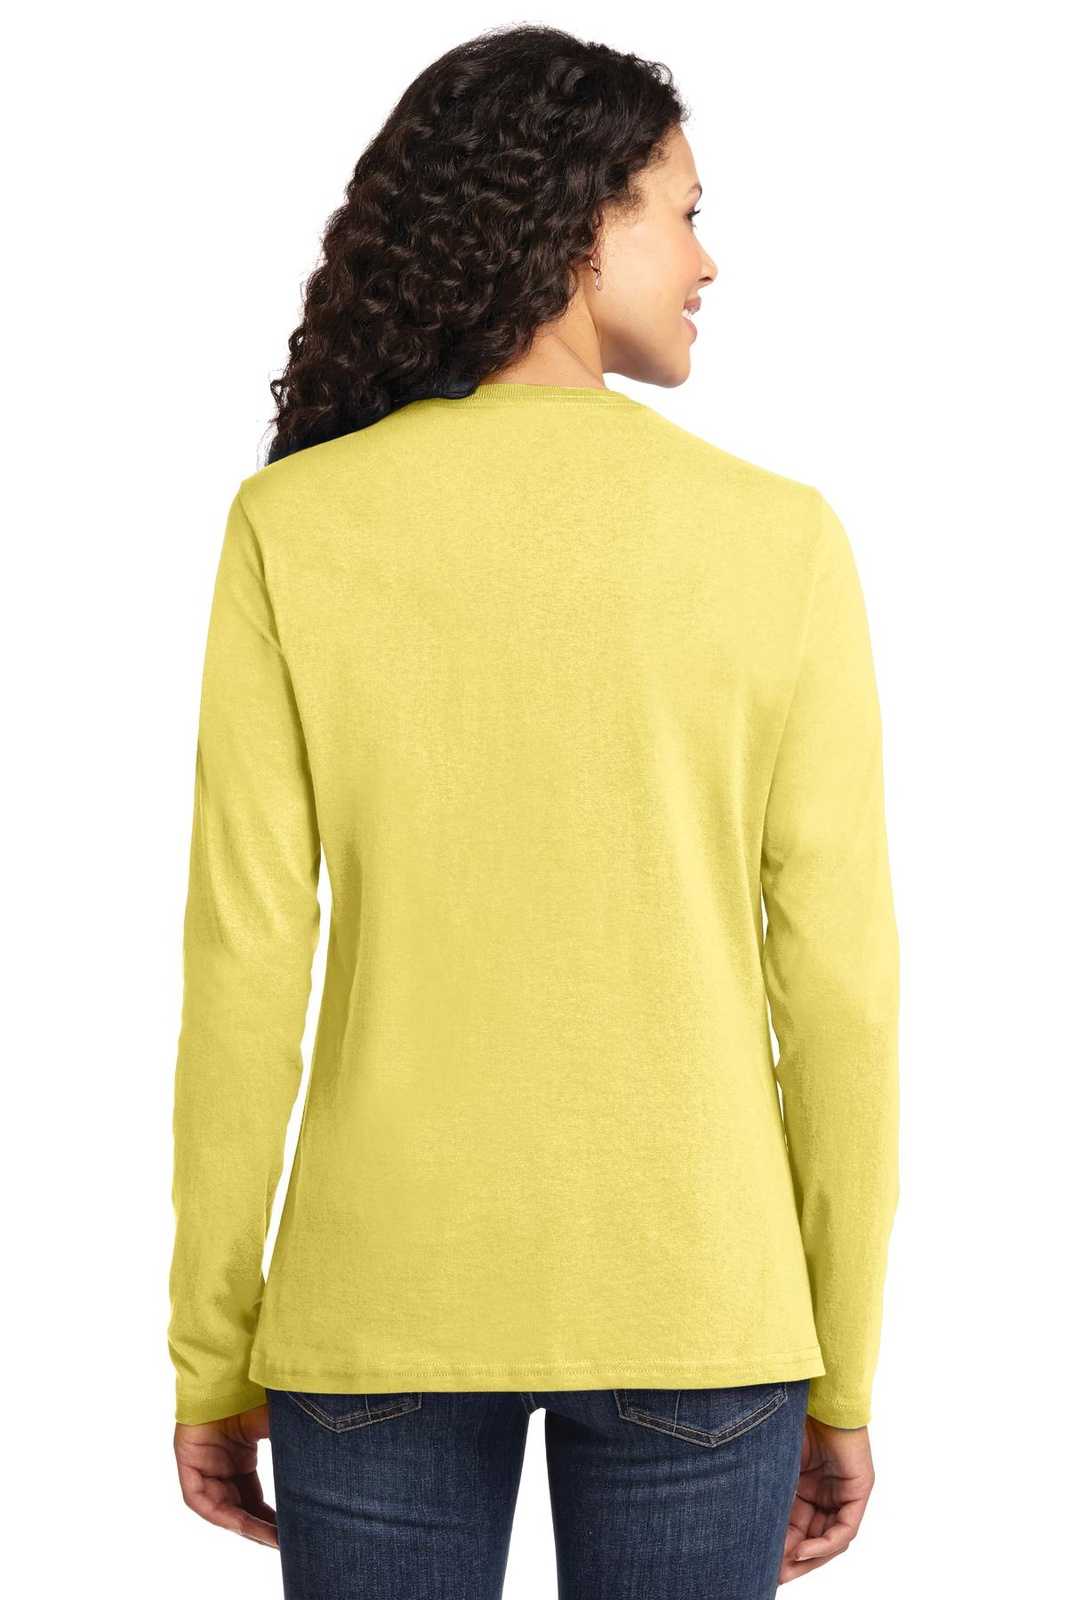 Port & Company LPC54LS Ladies Long Sleeve Core Cotton Tee - Yellow - HIT a Double - 1